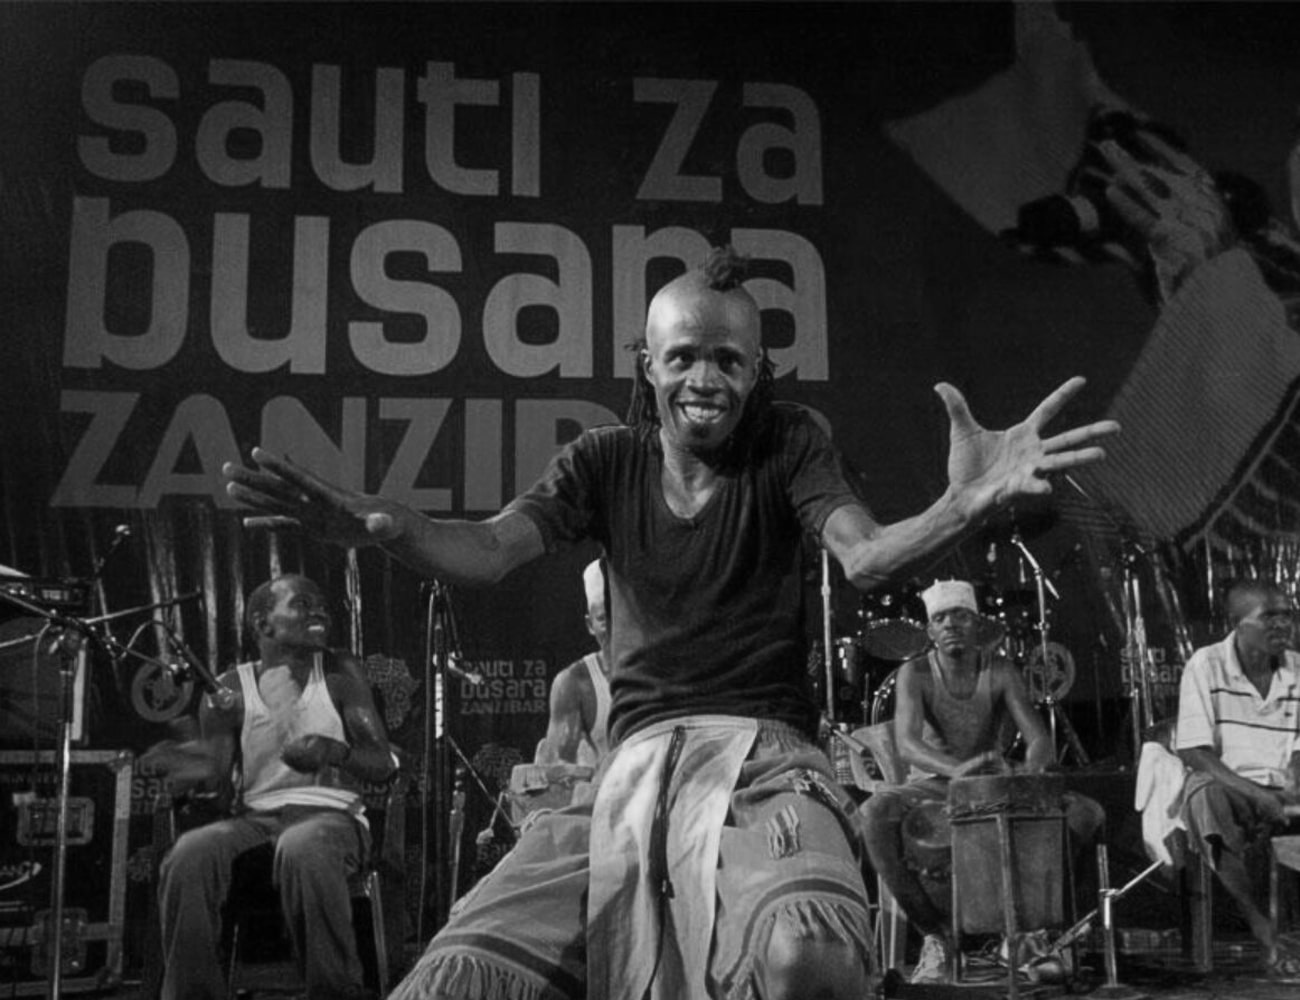 Performance at The Sauti za Busara Music Festival